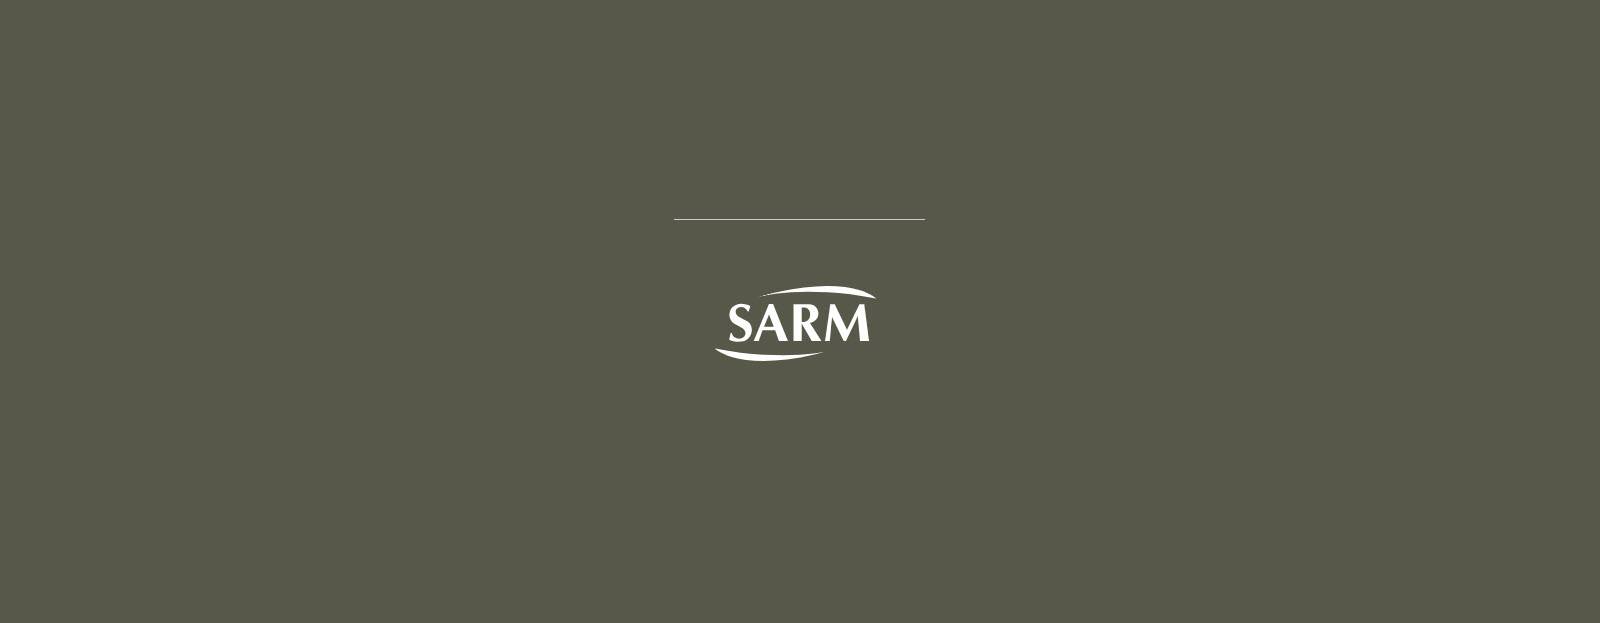 SARM sounds alarm